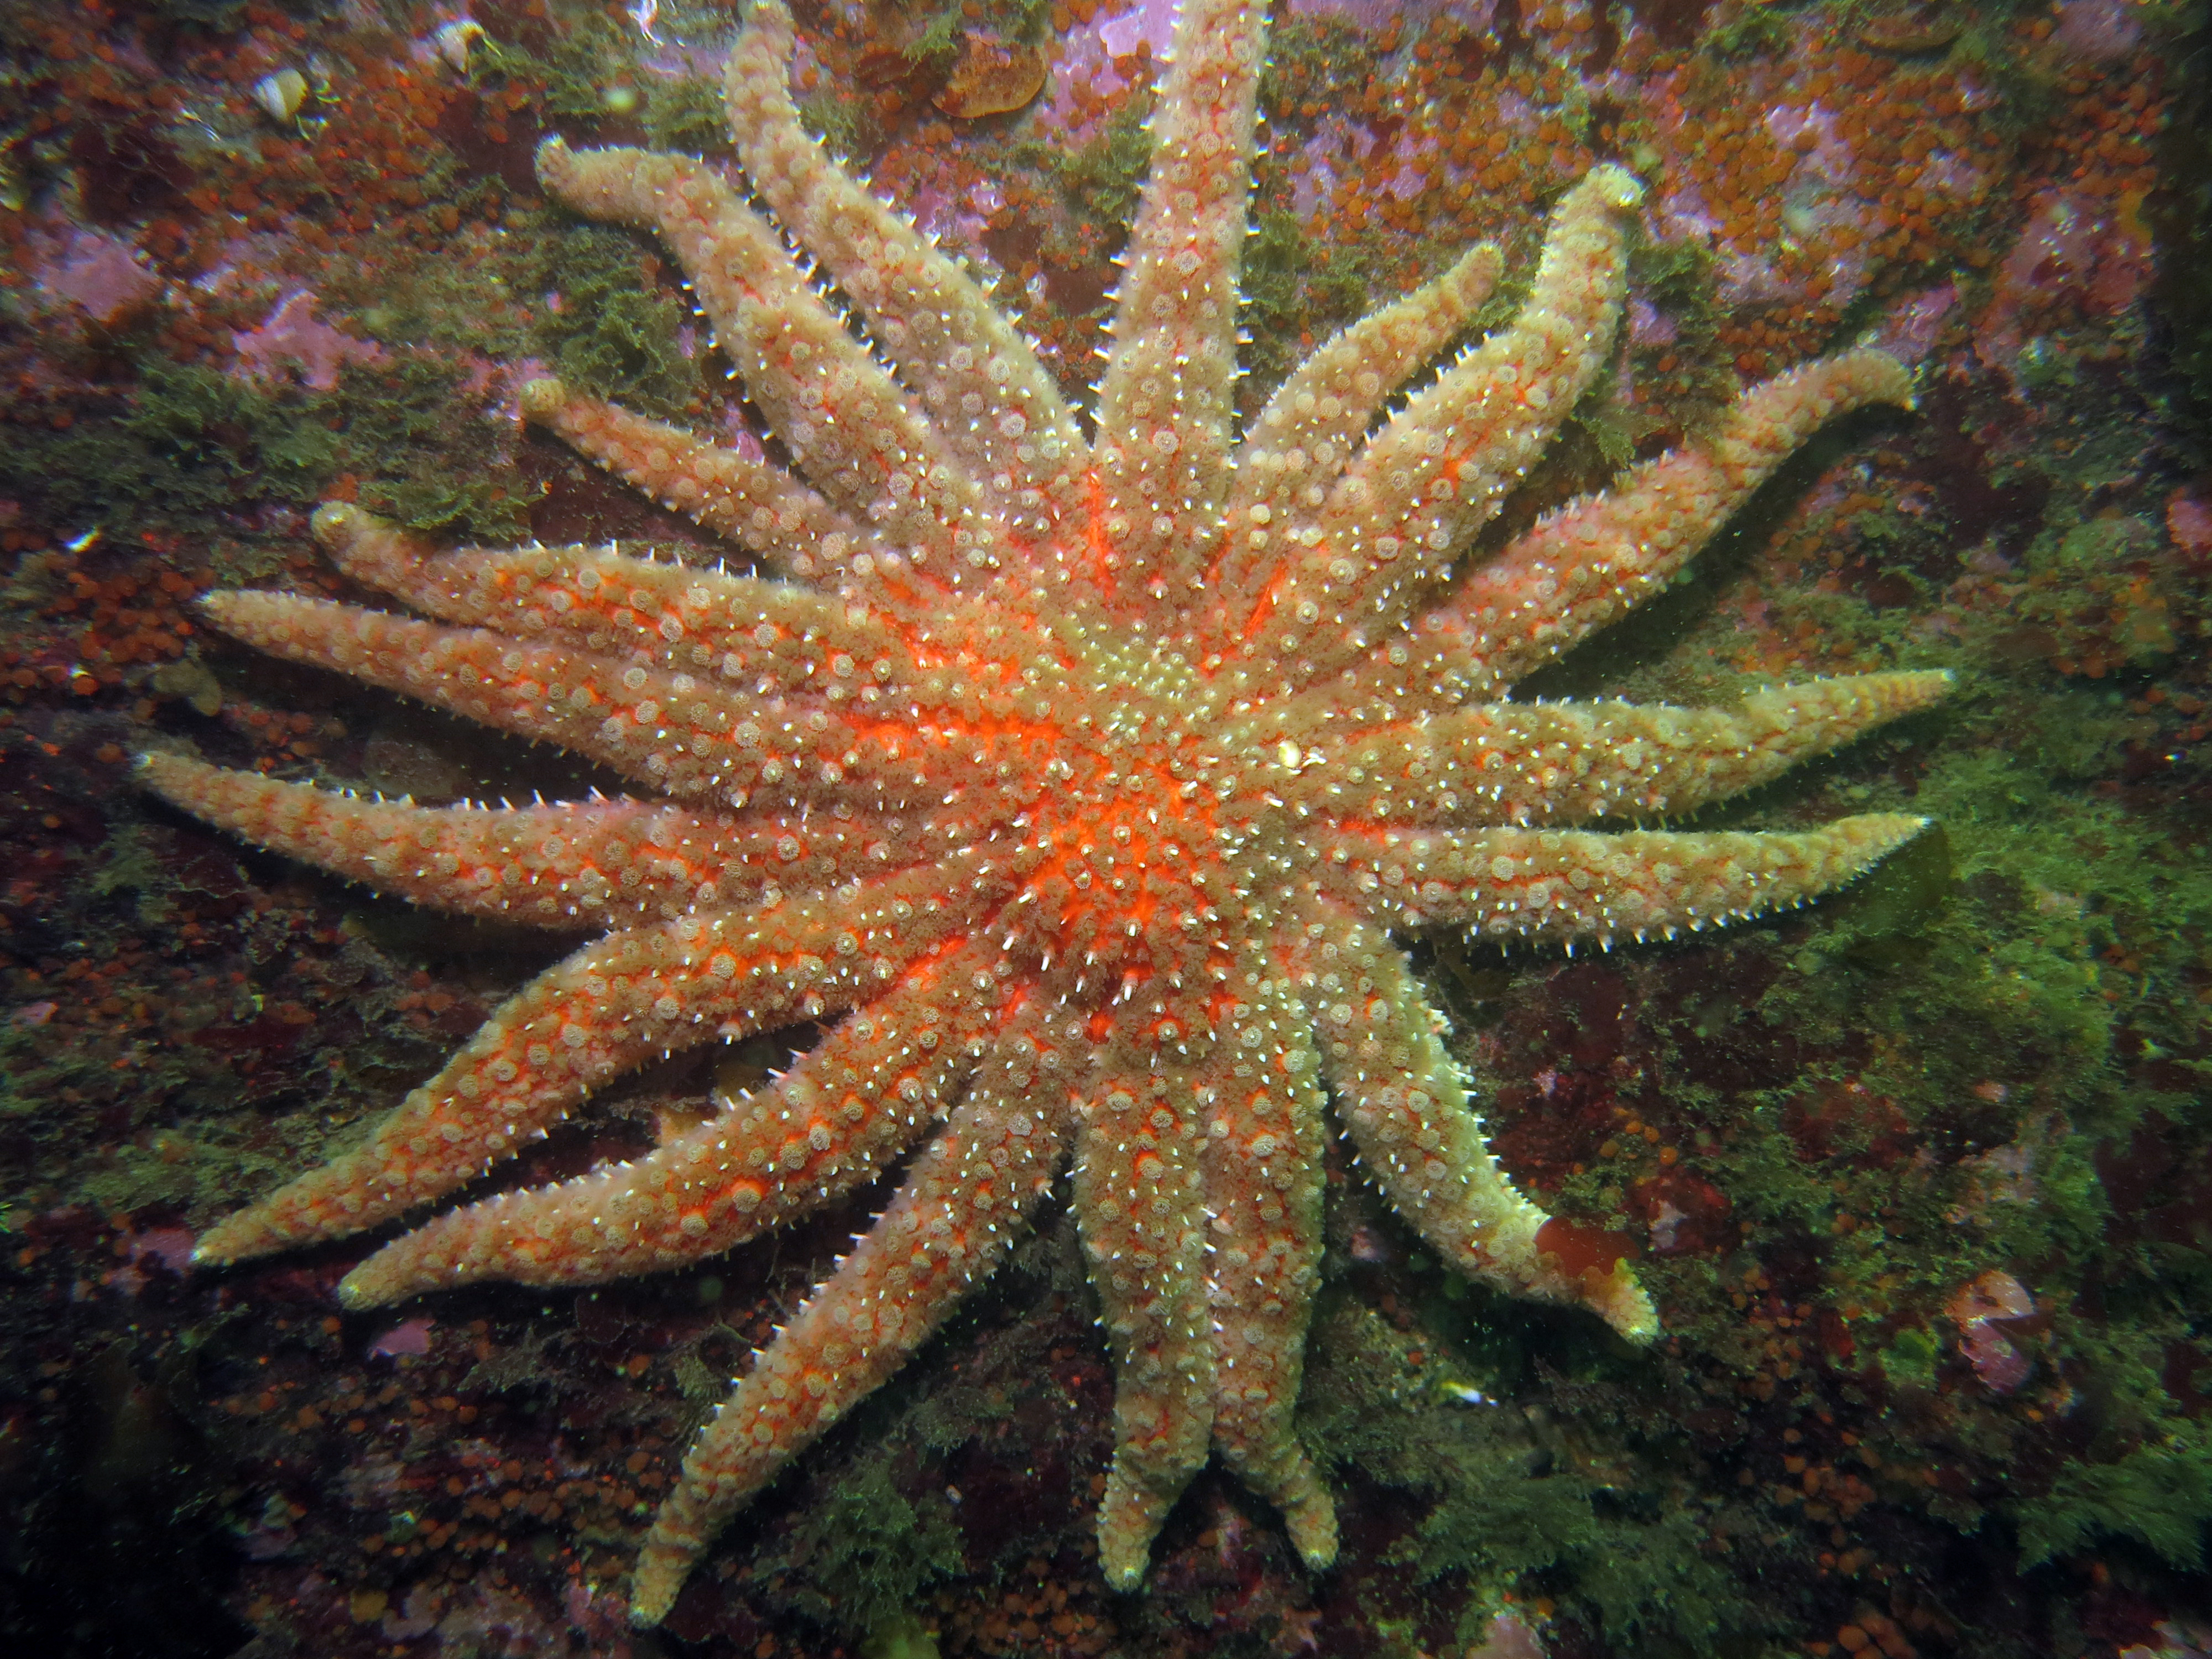 Sunflower sea star - Wikipedia